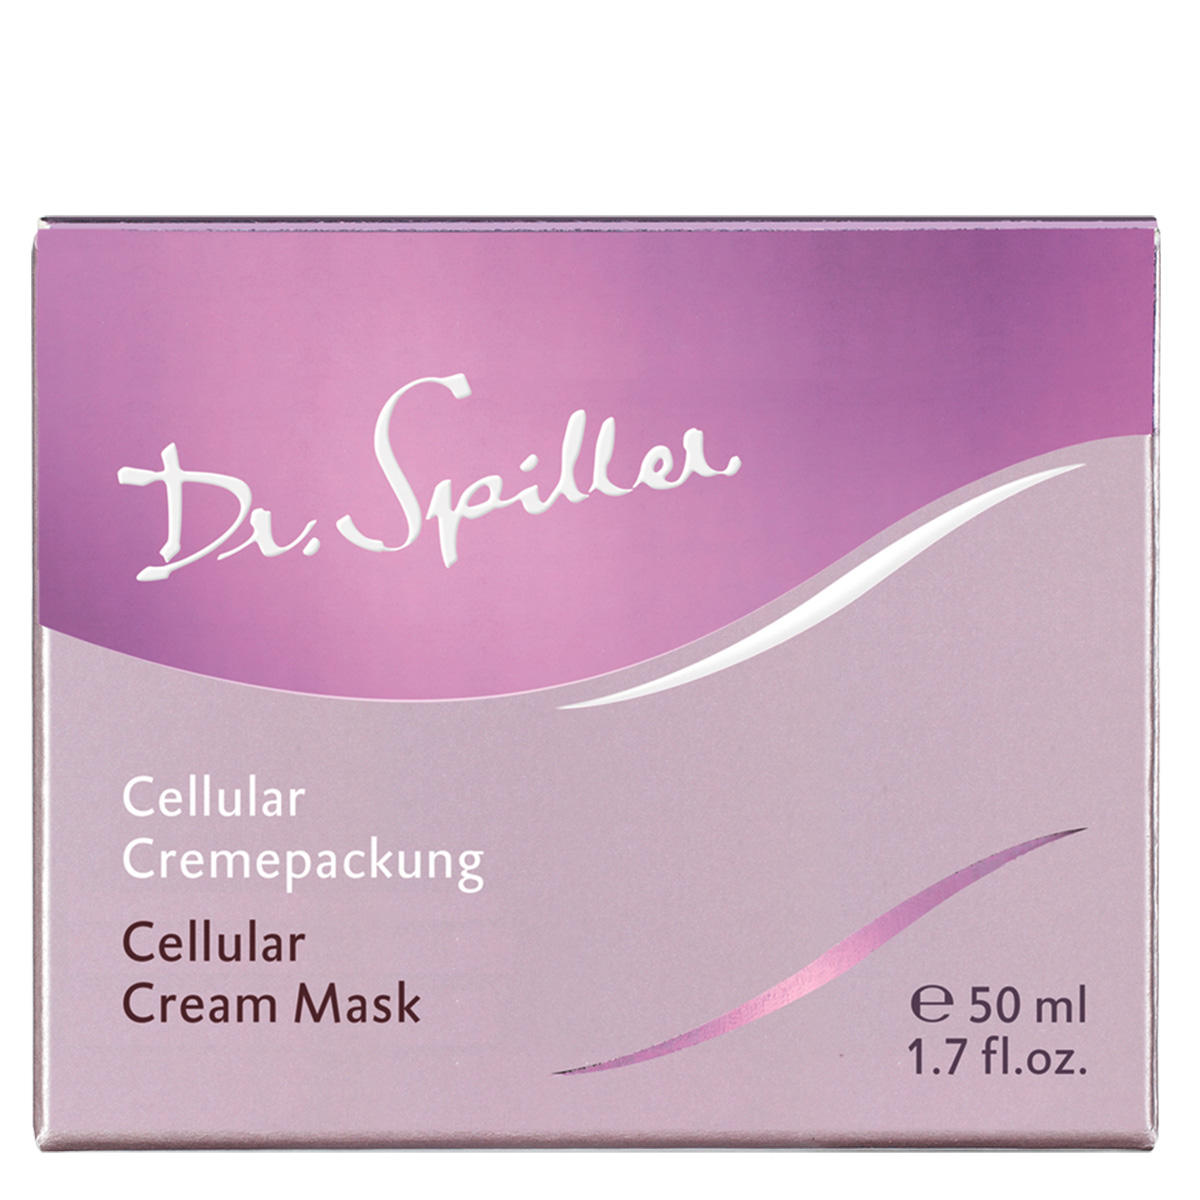 Dr. Spiller Biomimetic SkinCare Cellular Cremepackung 50 ml - 3